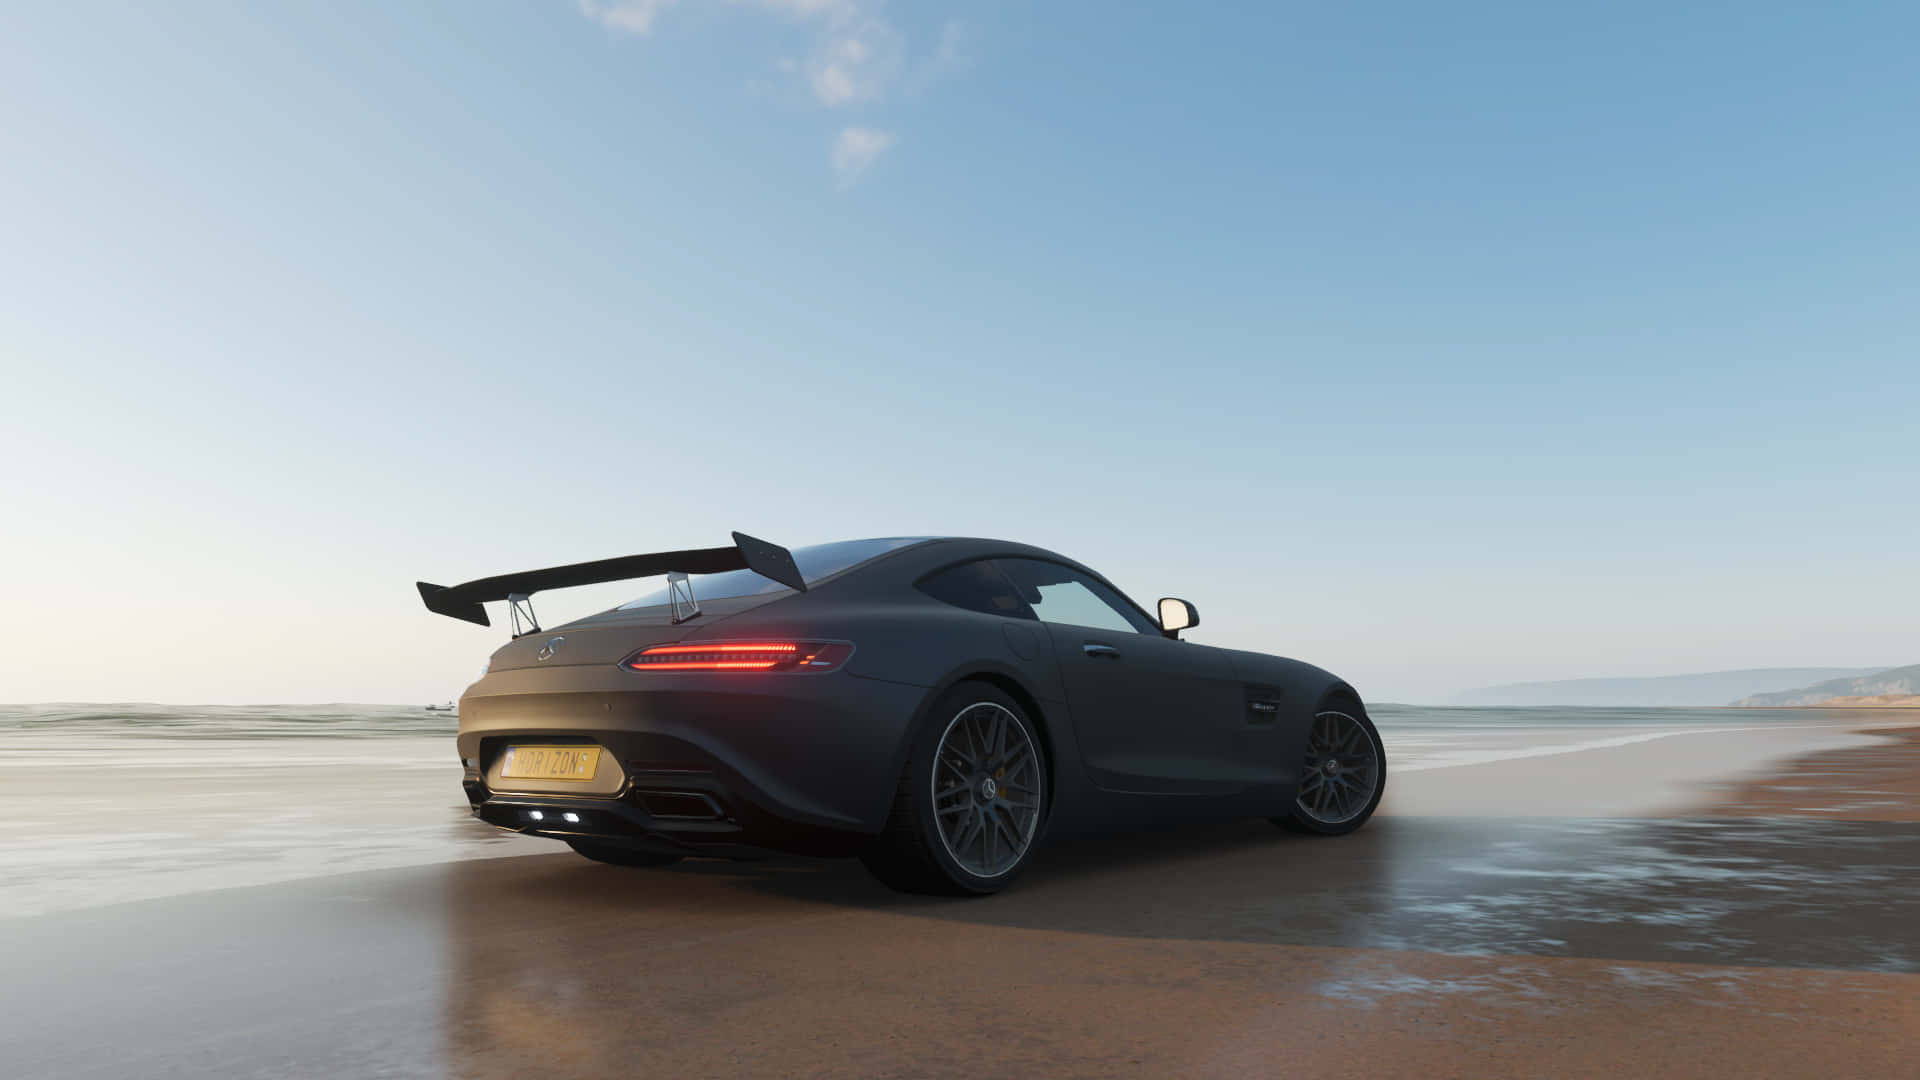 Enjoy stunning visuals with Forza Horizon 4